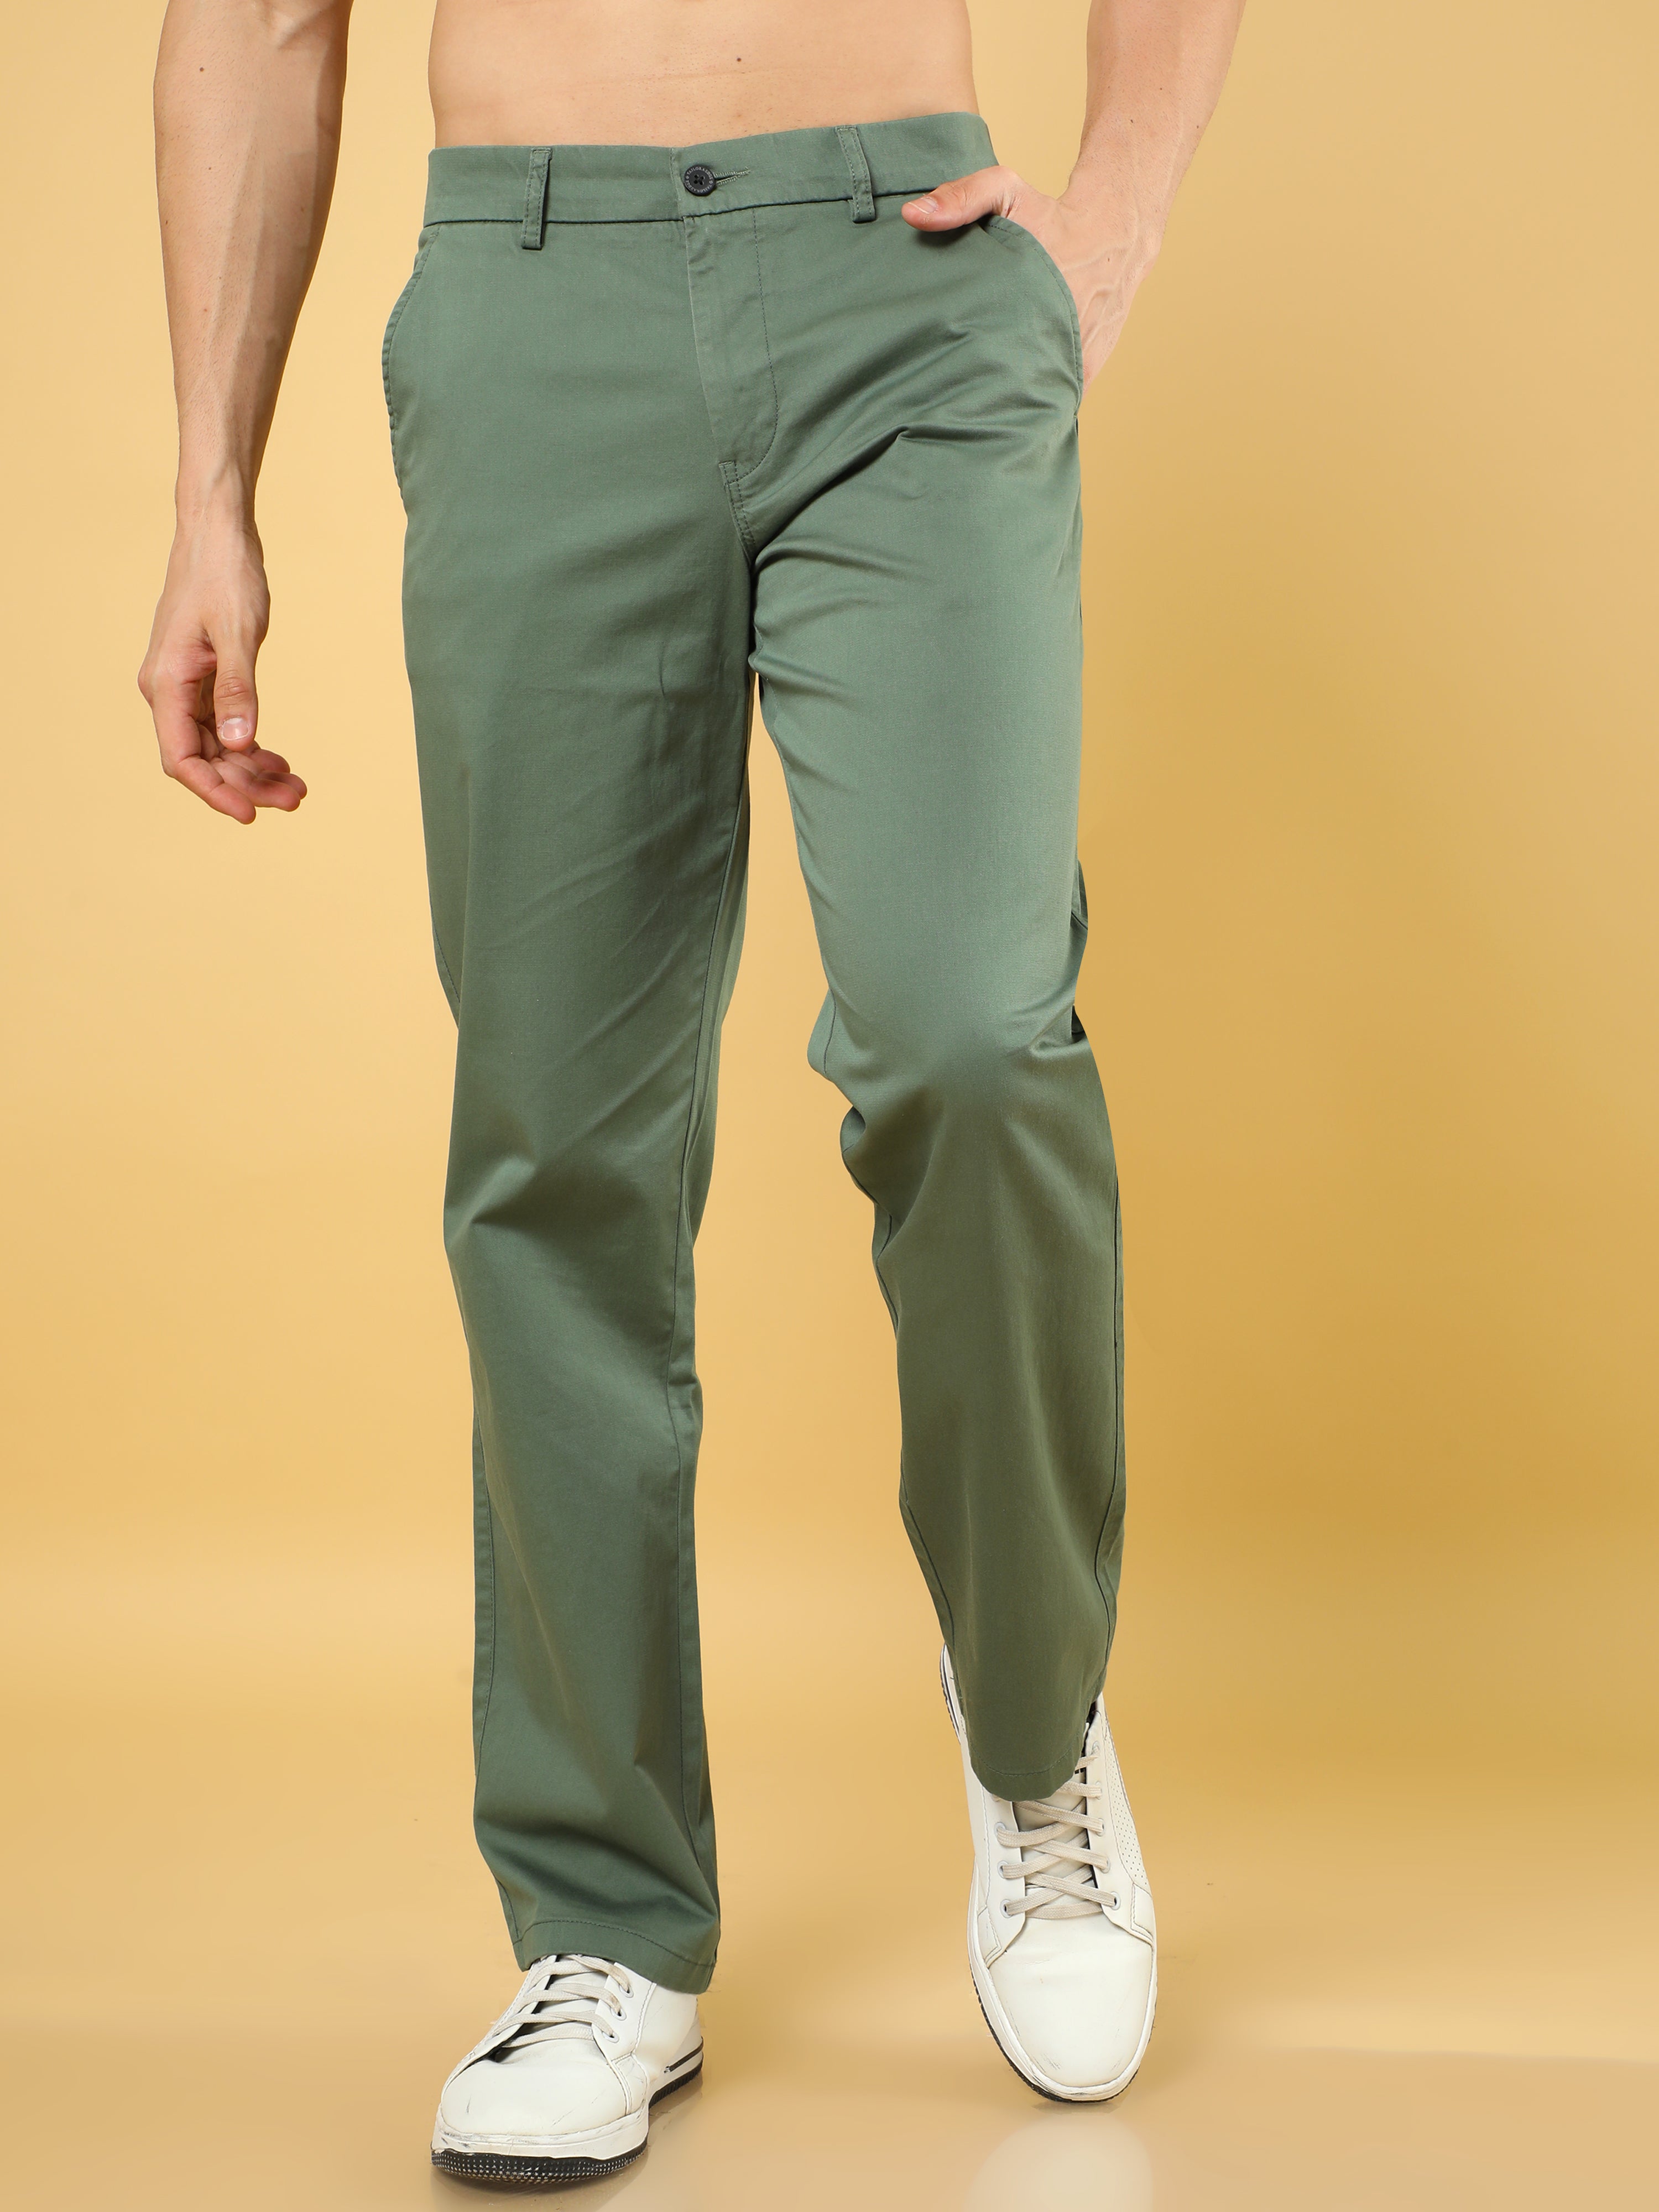 CAICJ98 Gifts For Men Men's Drawstring Linen Pants Casual Summer Beach Loose  Trousers Red,XL - Walmart.com